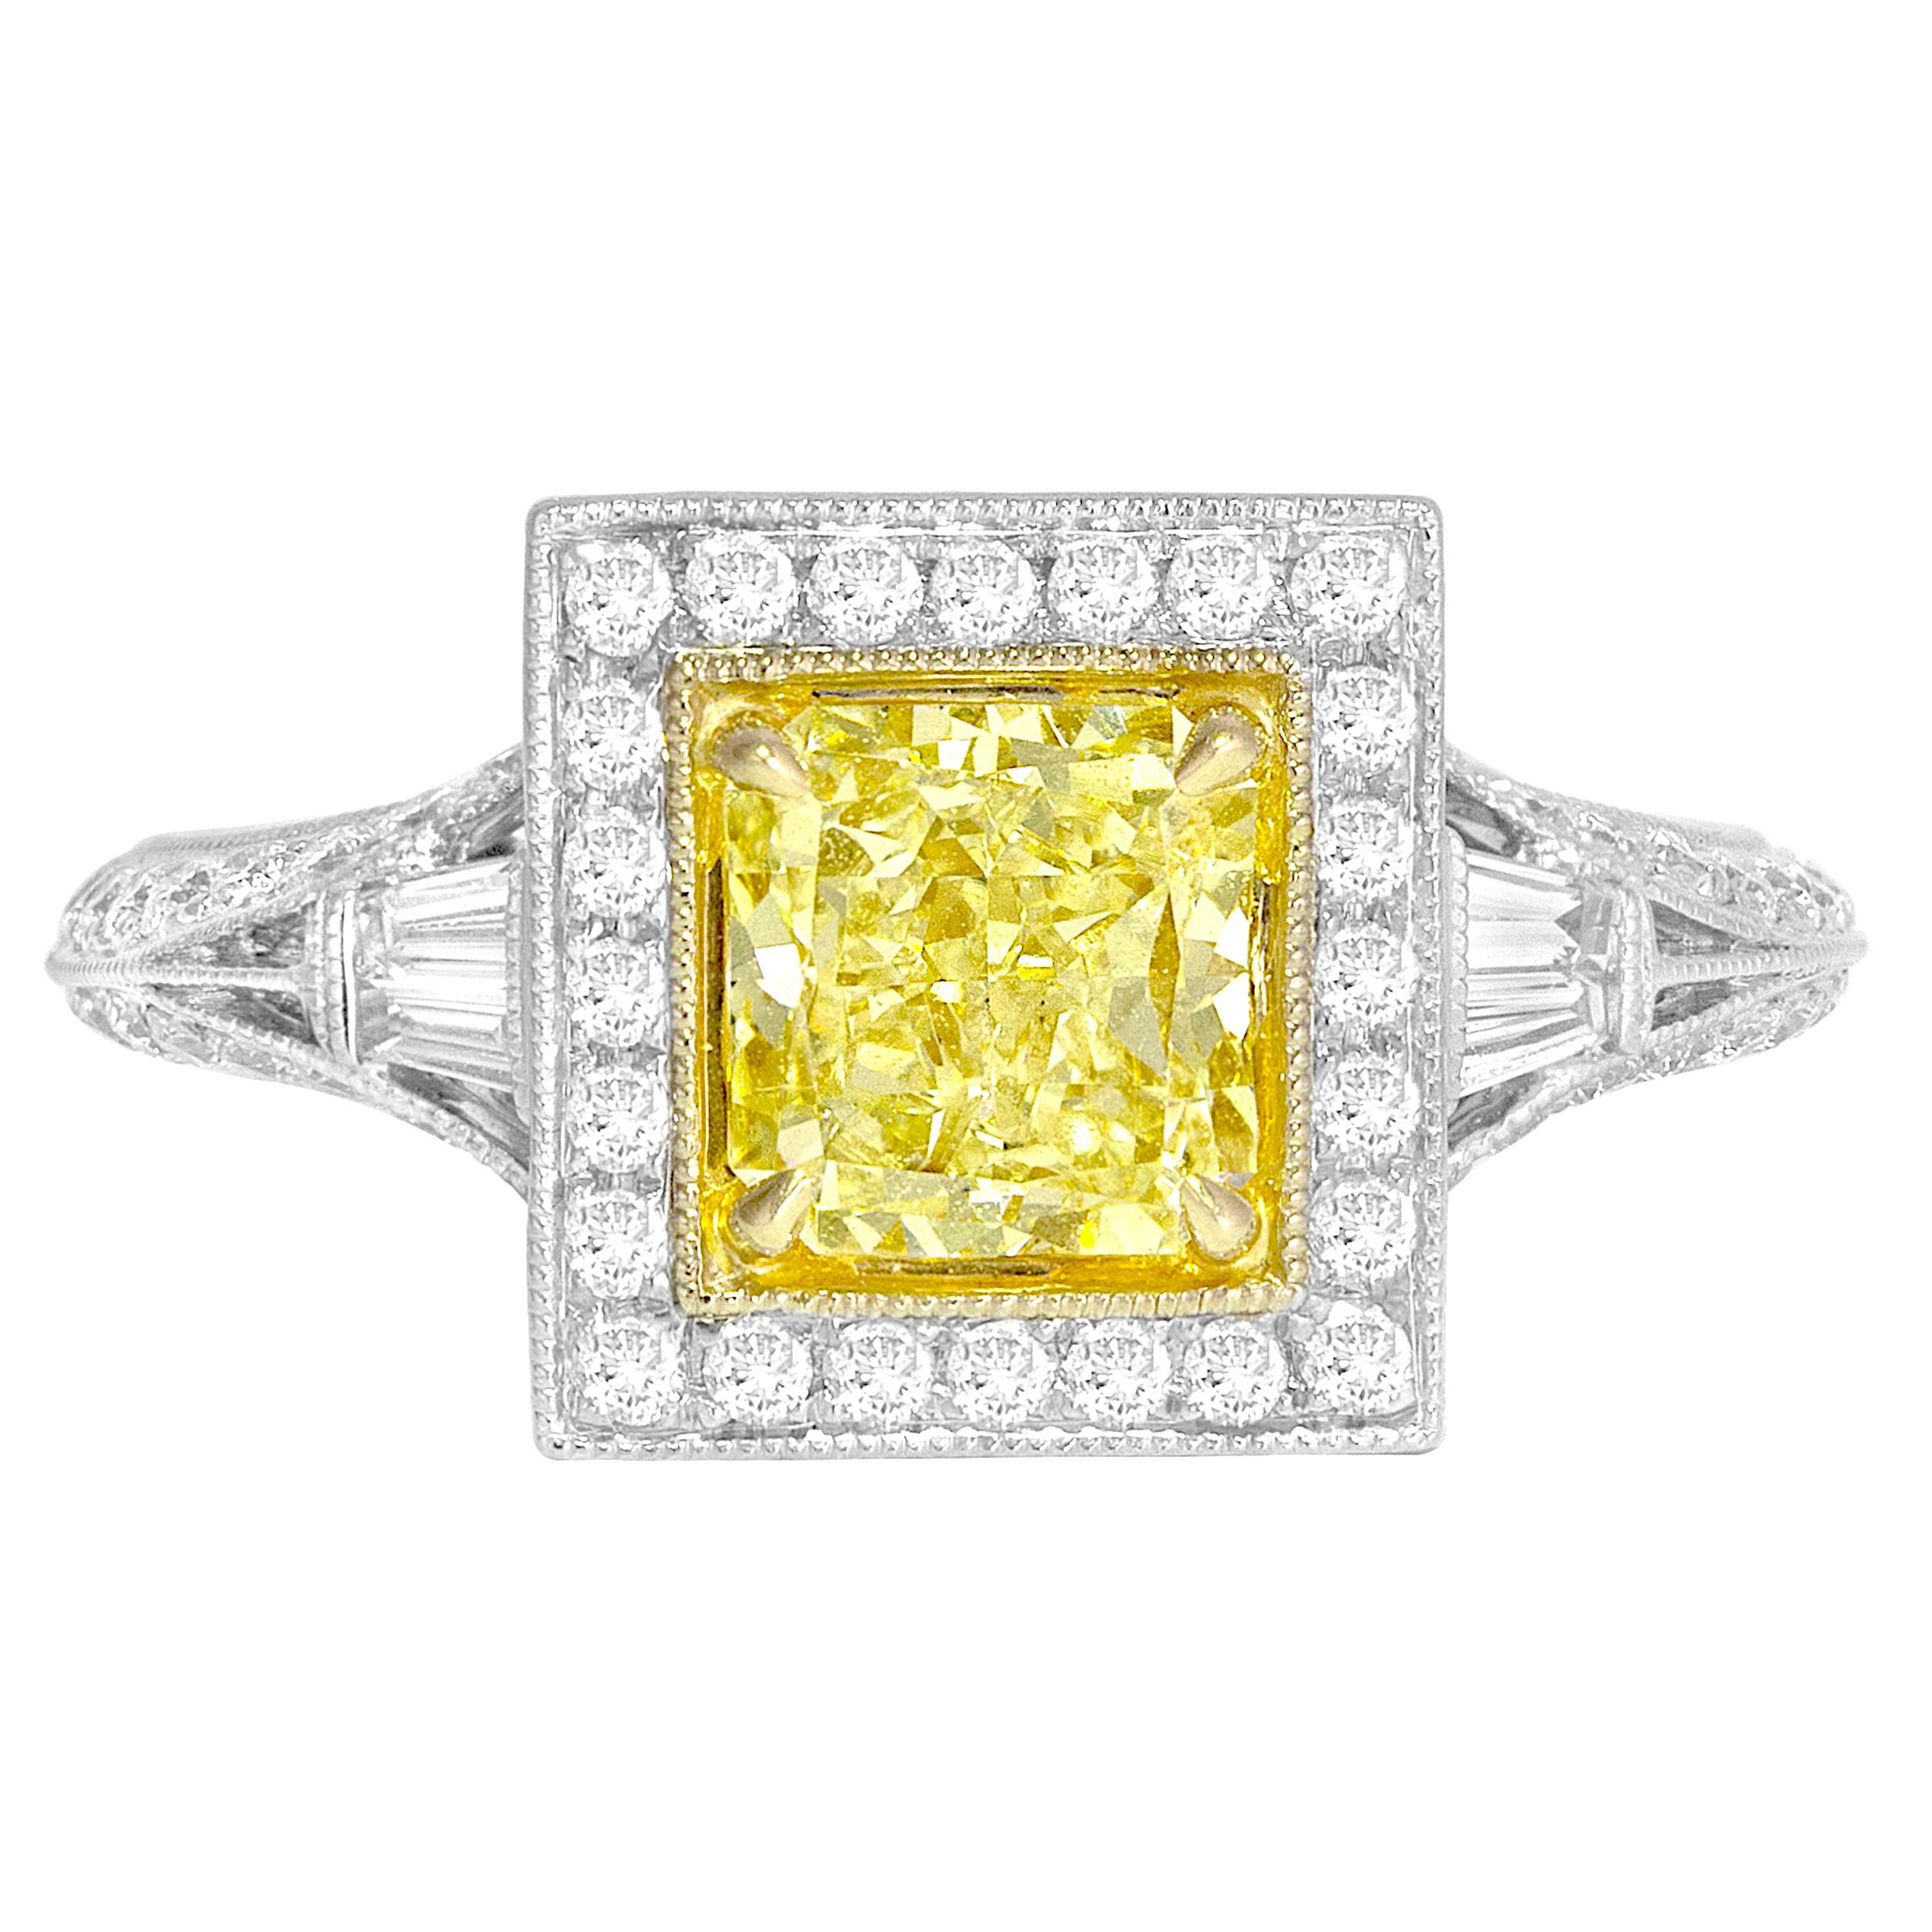 DiamondTown GIA Certified 1.22 Carat Natural Fancy Yellow SI1 Diamond Ring